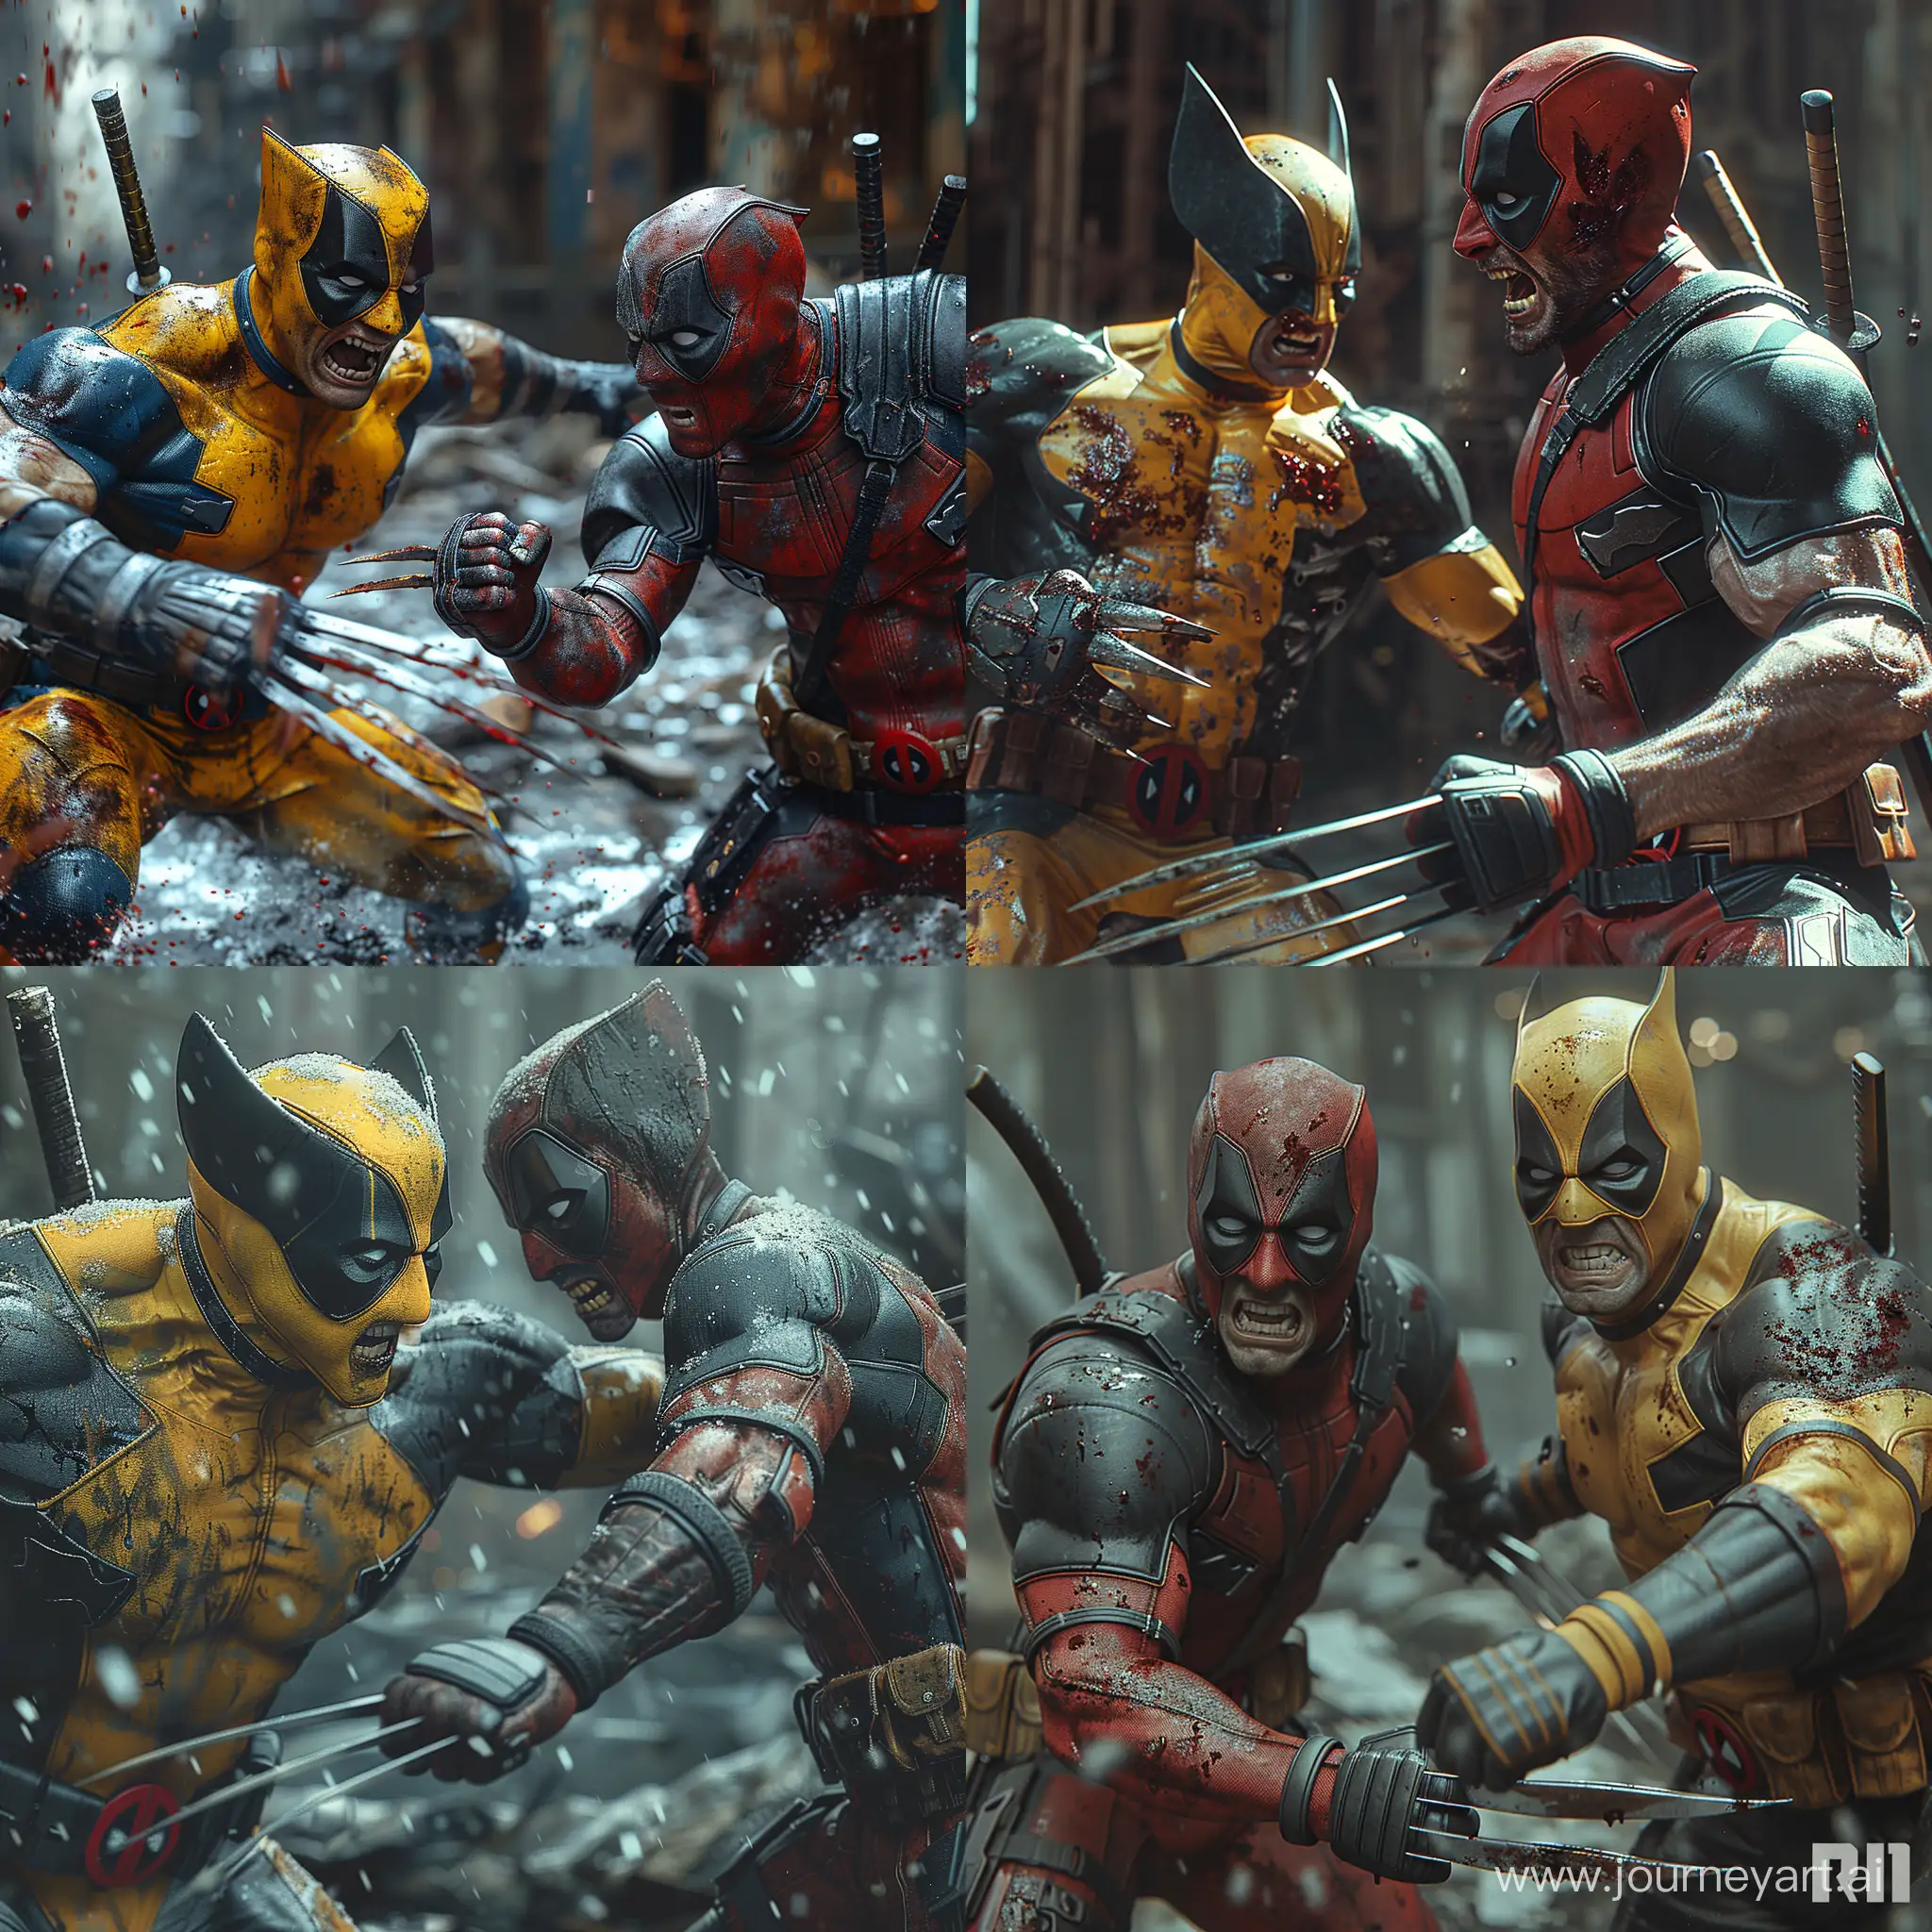 Epic-Battle-Realistic-Wolverine-and-Deadpool-Clash-in-Cinematic-Prime-1-Studio-Scene